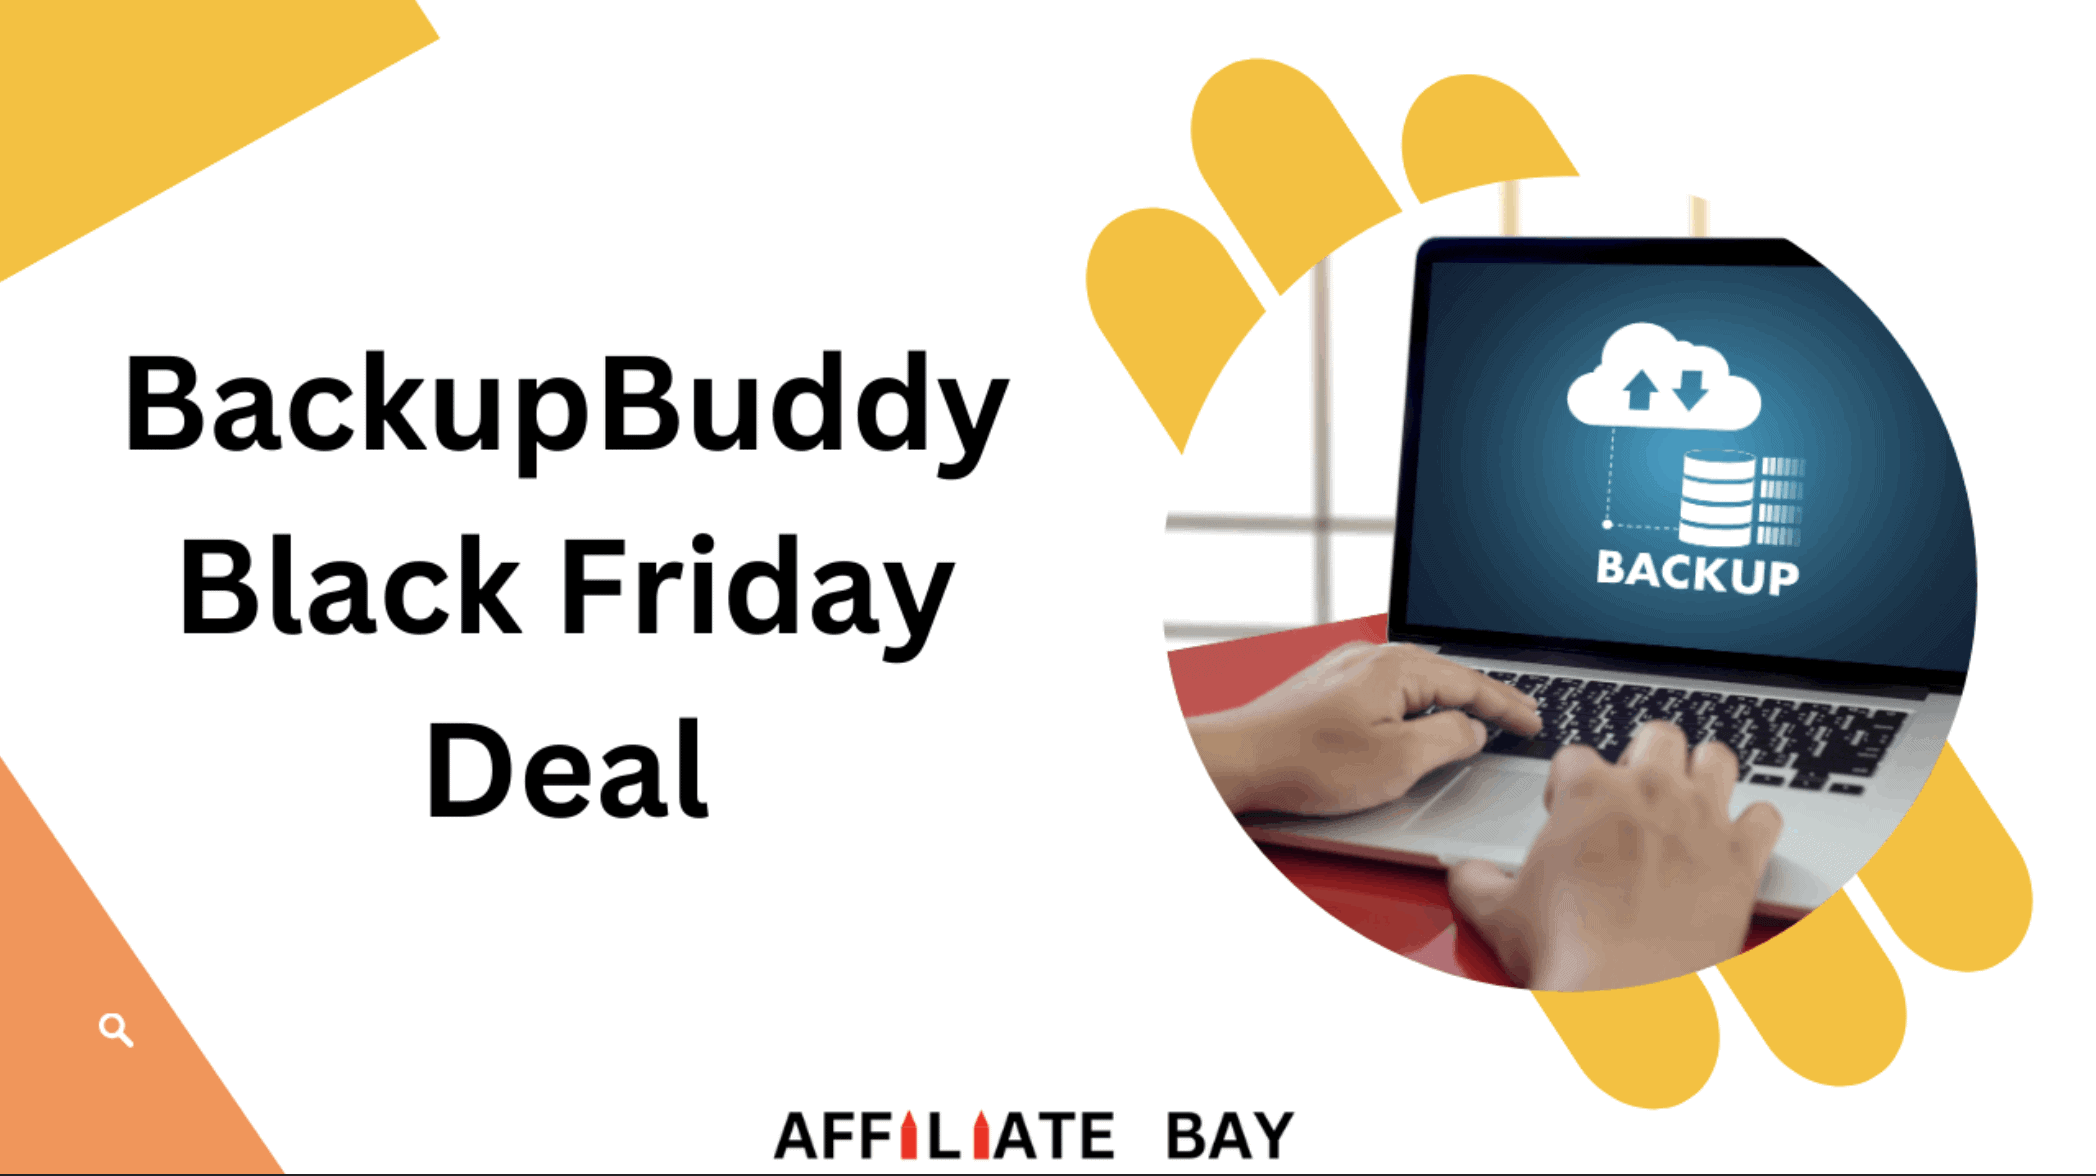 BackupBuddy Black Friday Deals